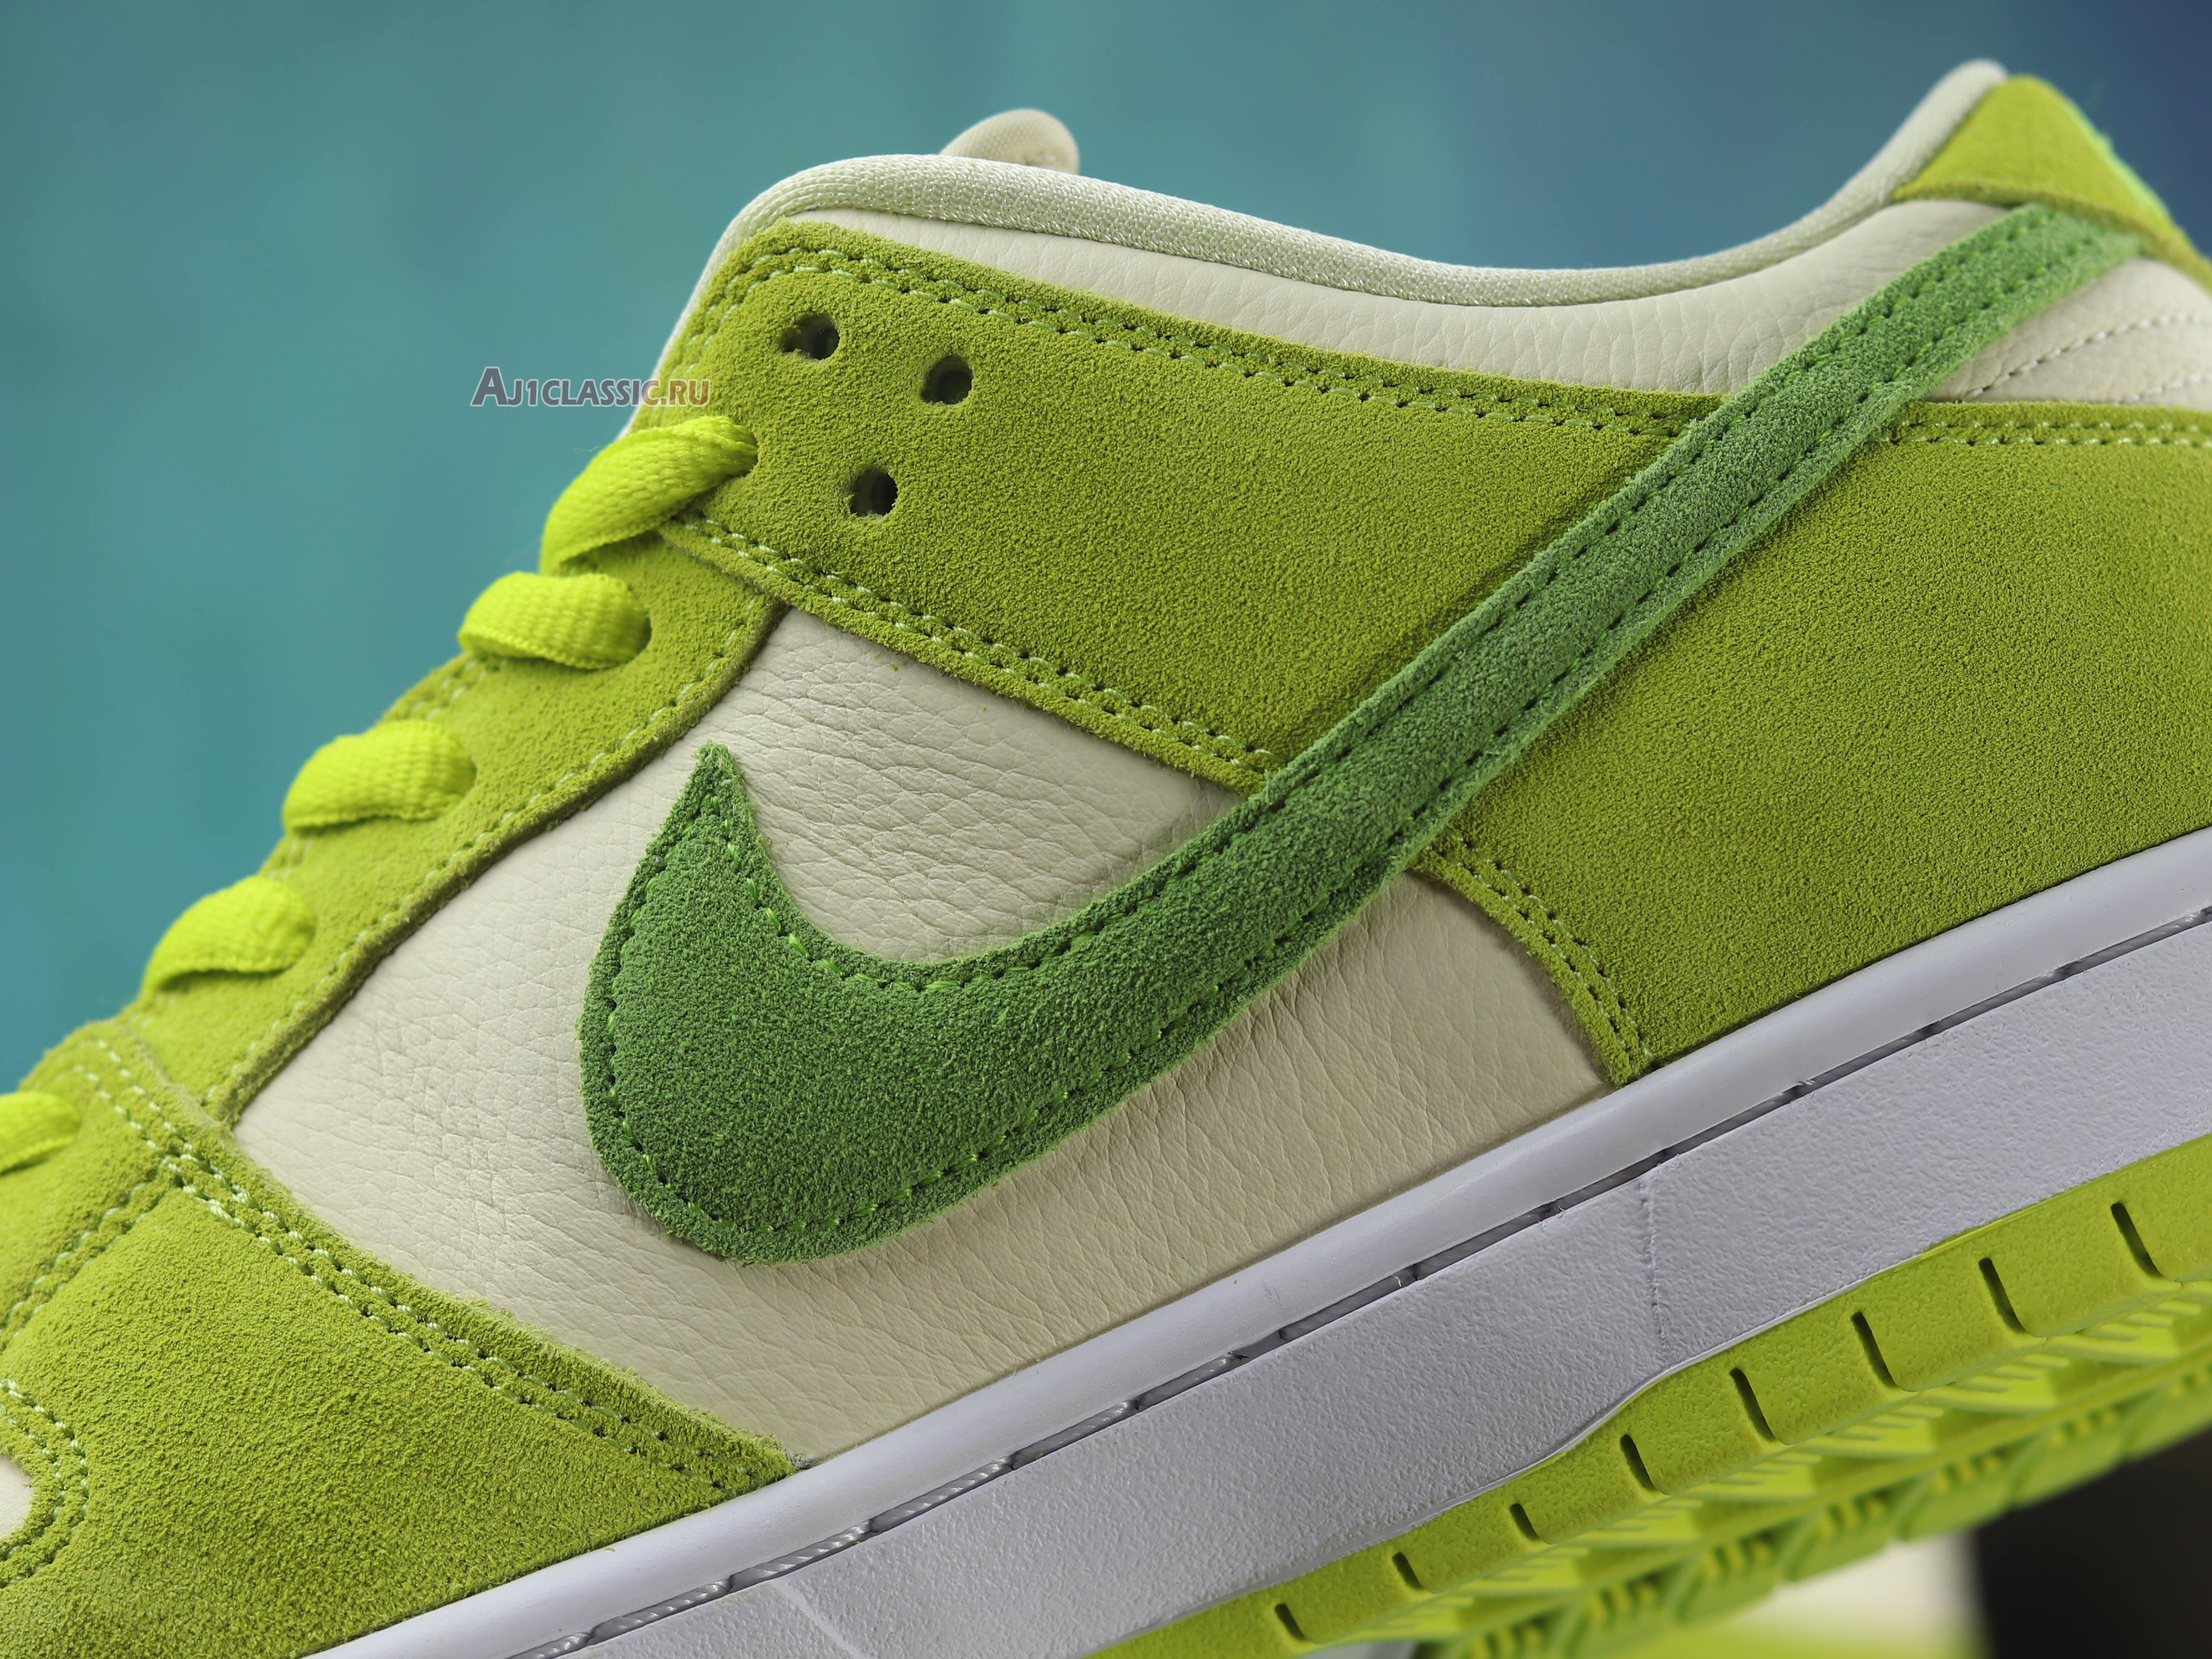 Nike SB Dunk Low "Green Apple" DM0807-300